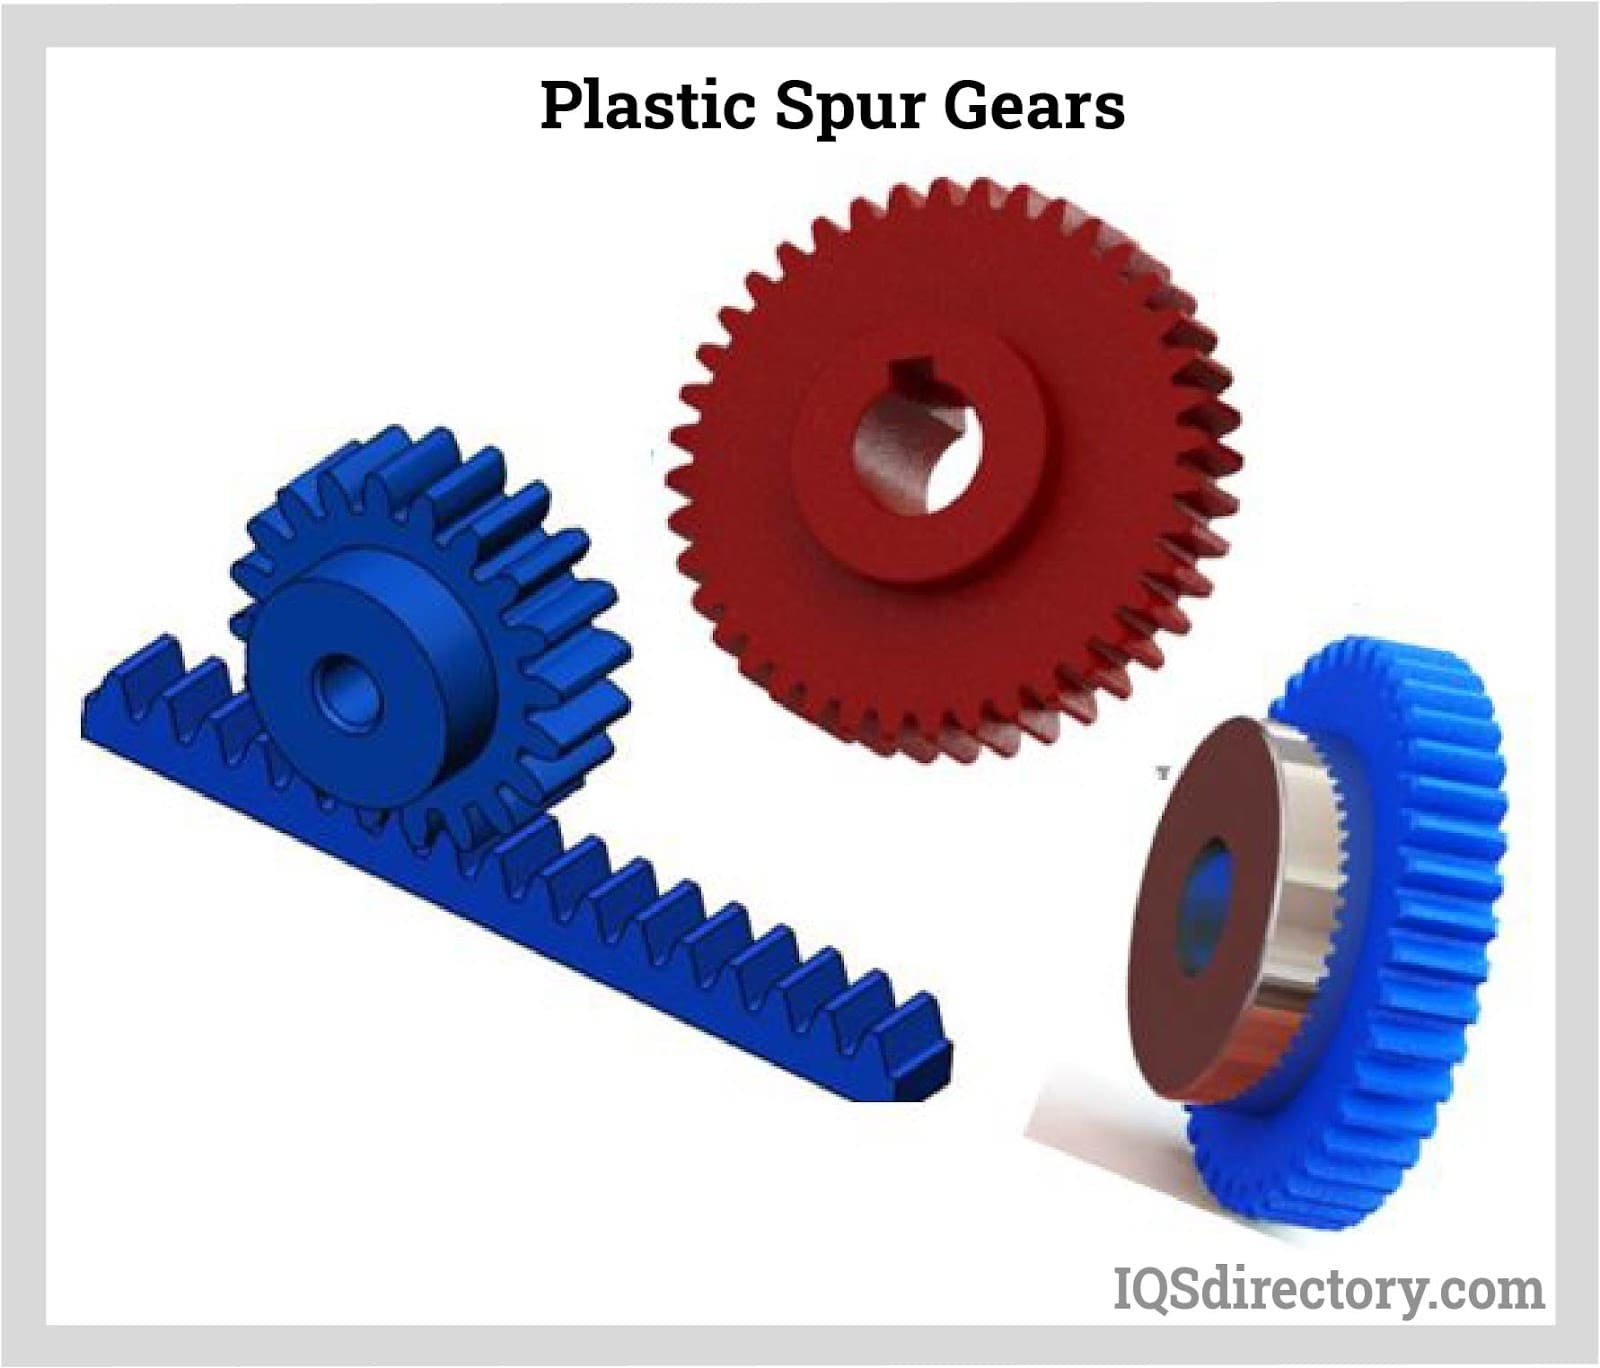 Plastic Spur Gears